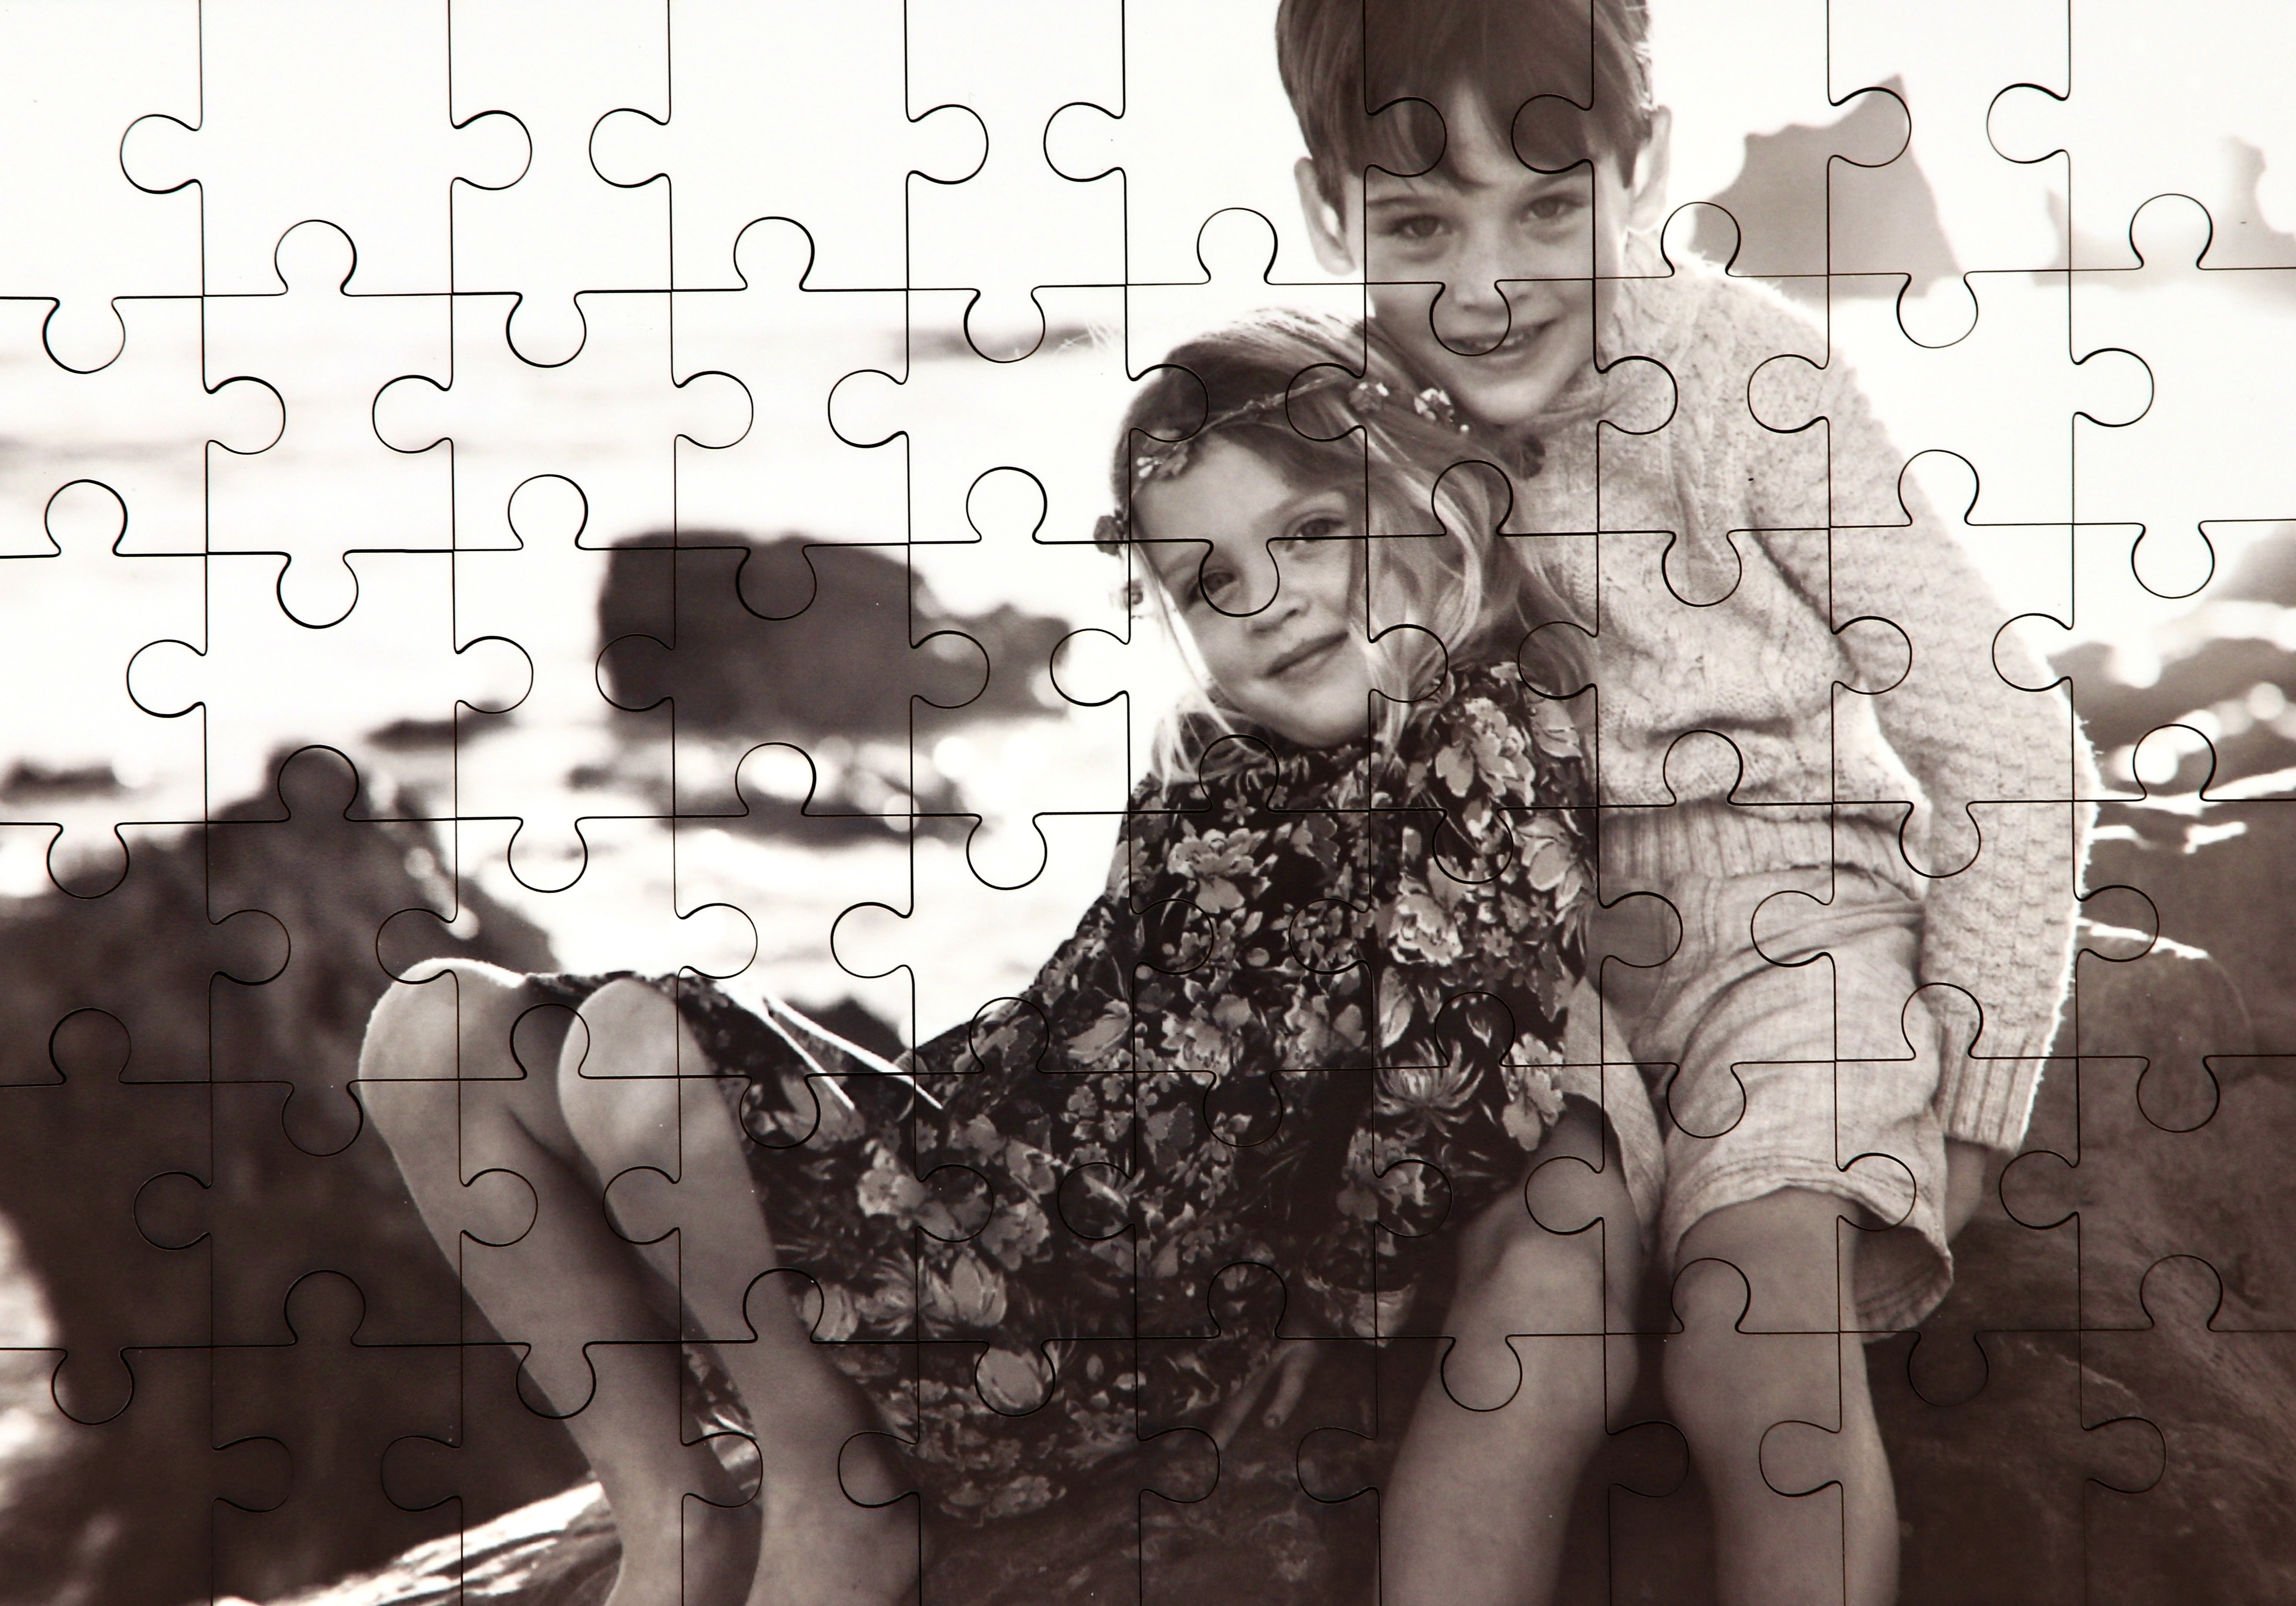 60 Piece Puzzle 7"x10"